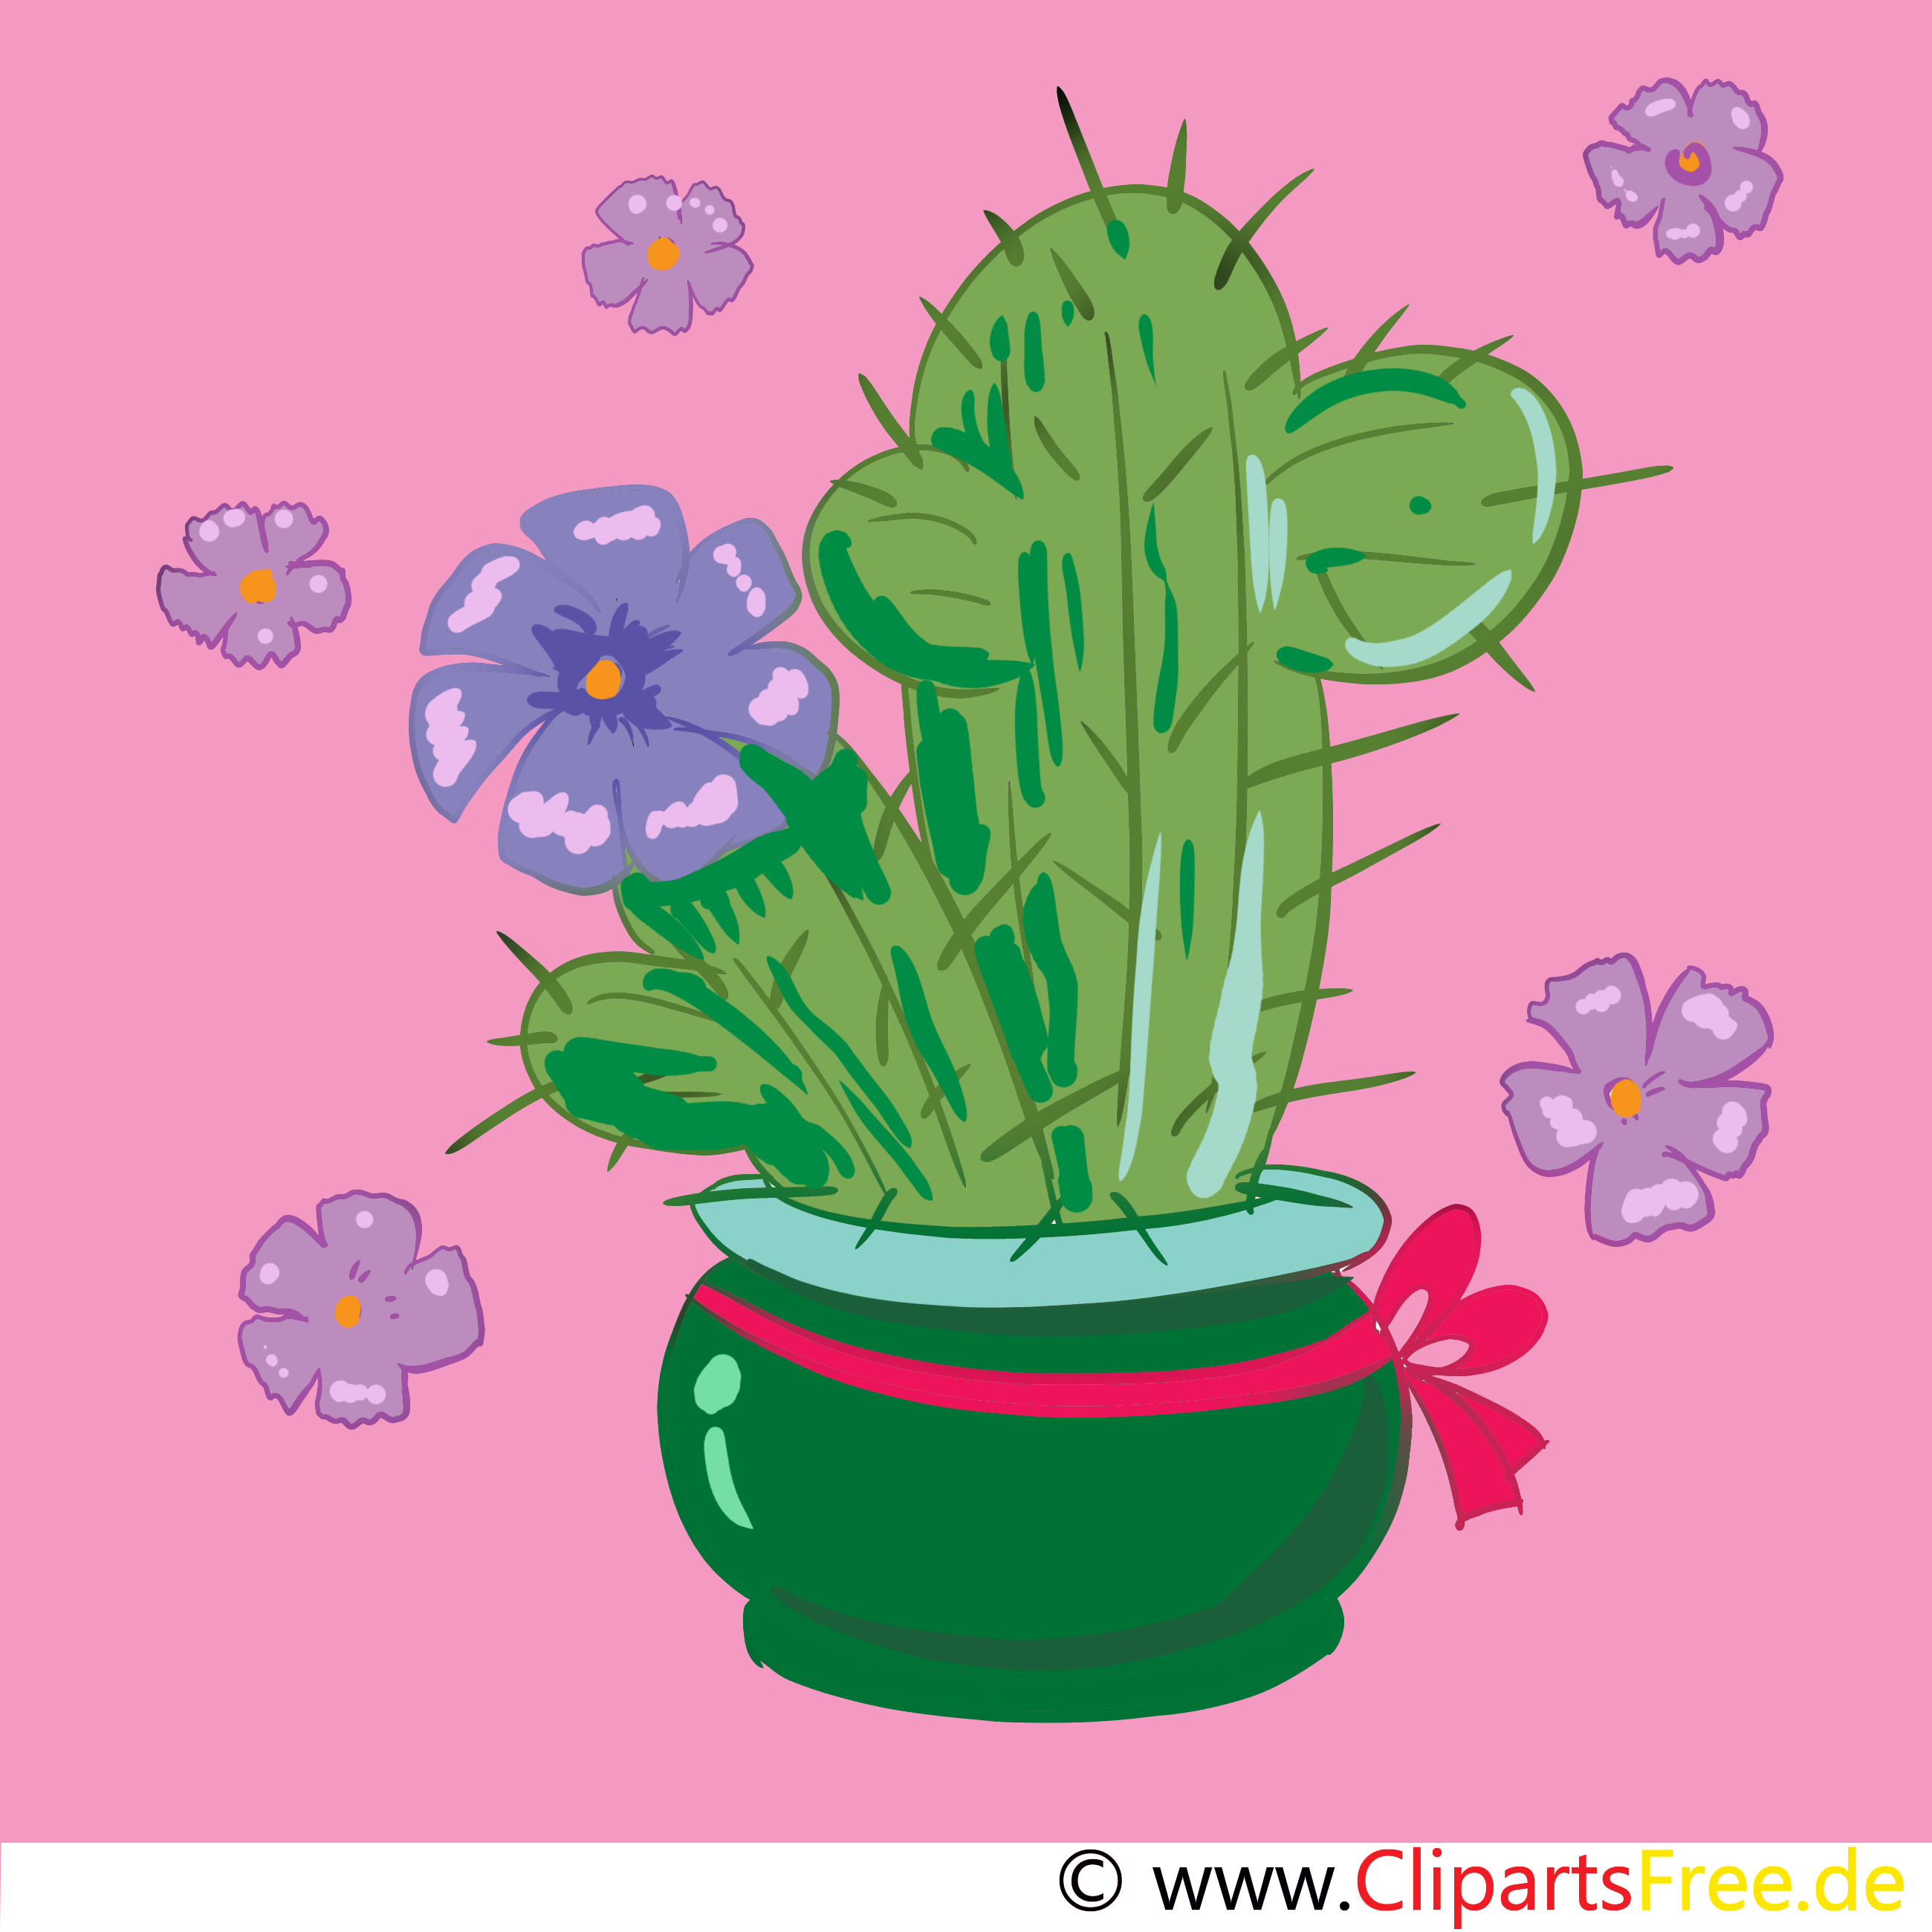 Cactus illustration - Plante images gratuites